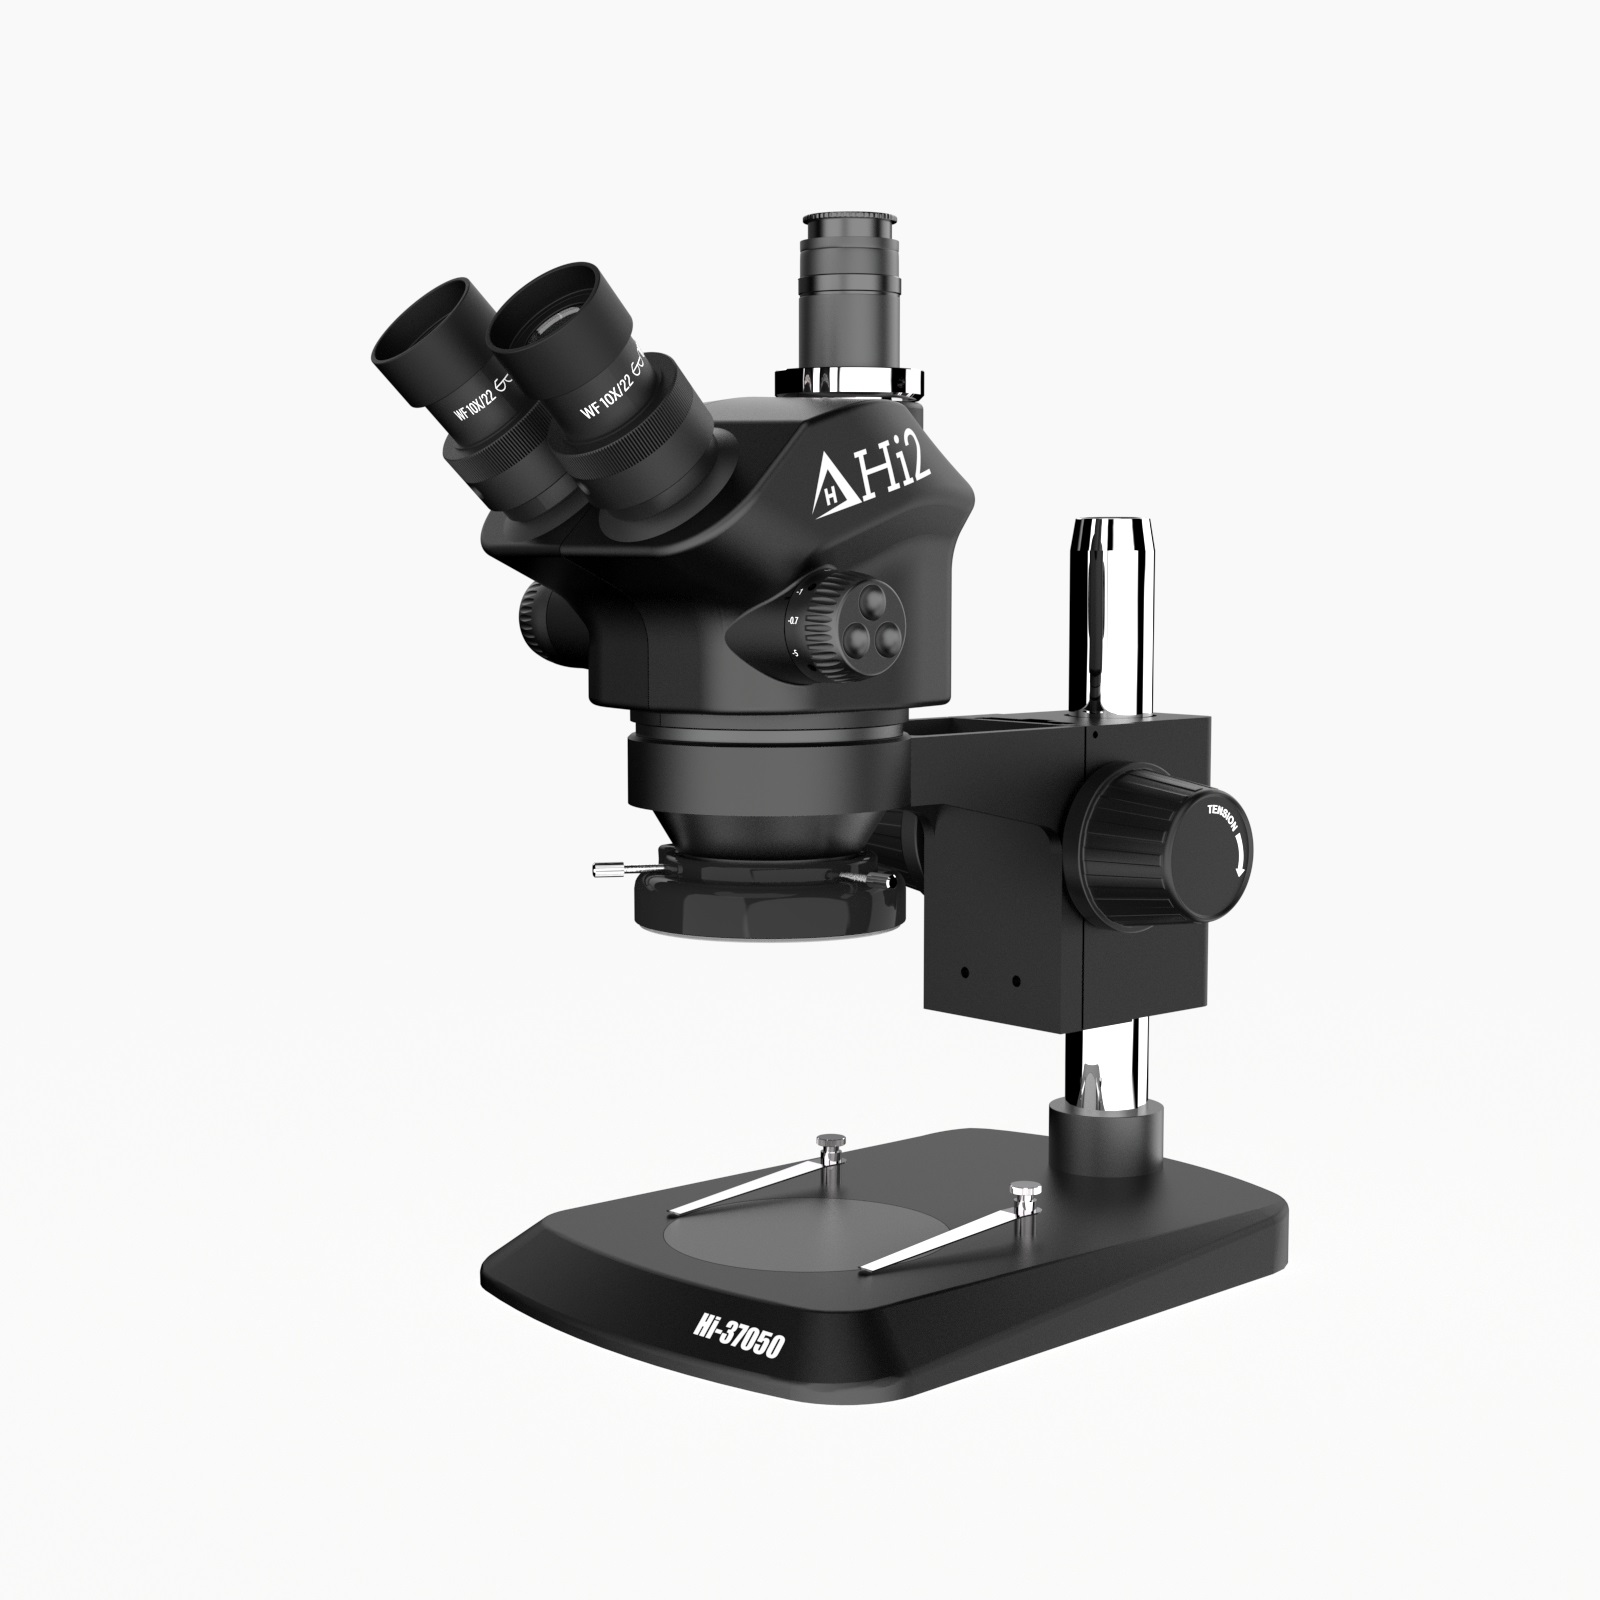 Kit Microscópio Trinocular Simul-Focal Hi2 Hi- 37050 7X-50X com Lâmpada LED + Relife M-12 Câmera + Lente Wd165 0.5x